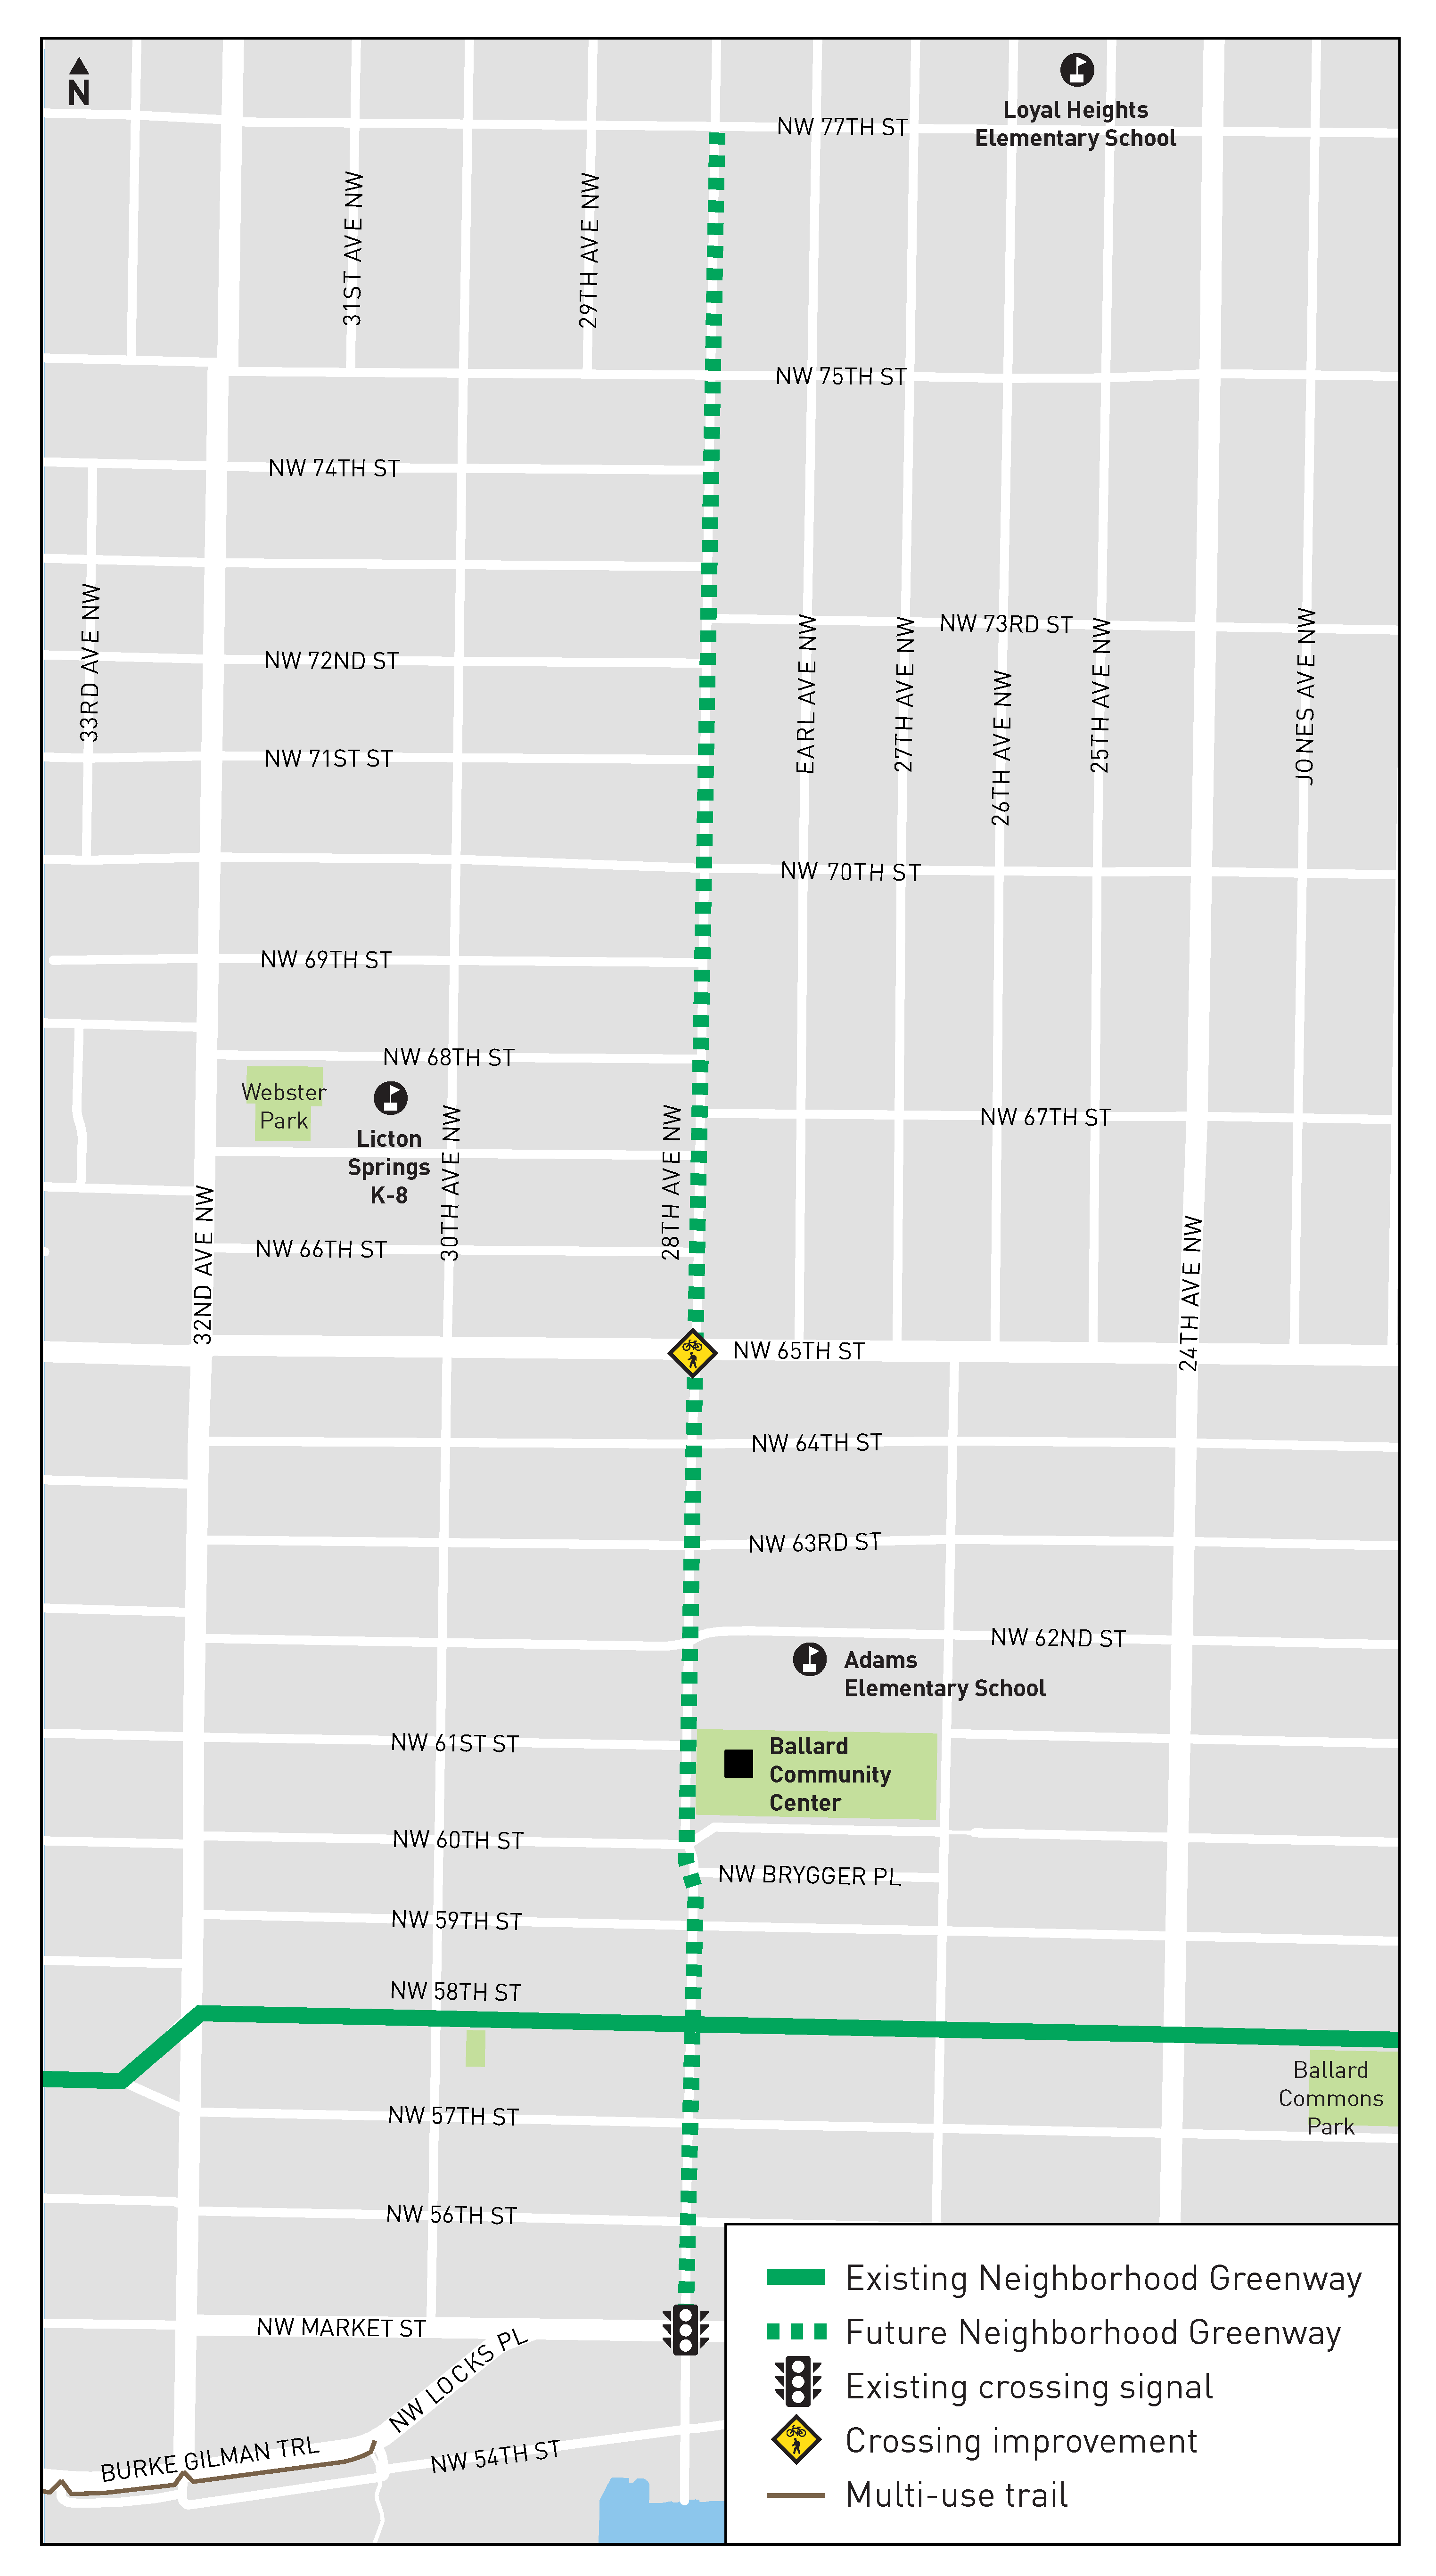 28th Ave NW - Adams Elementary School Neighborhood Greenway project area map